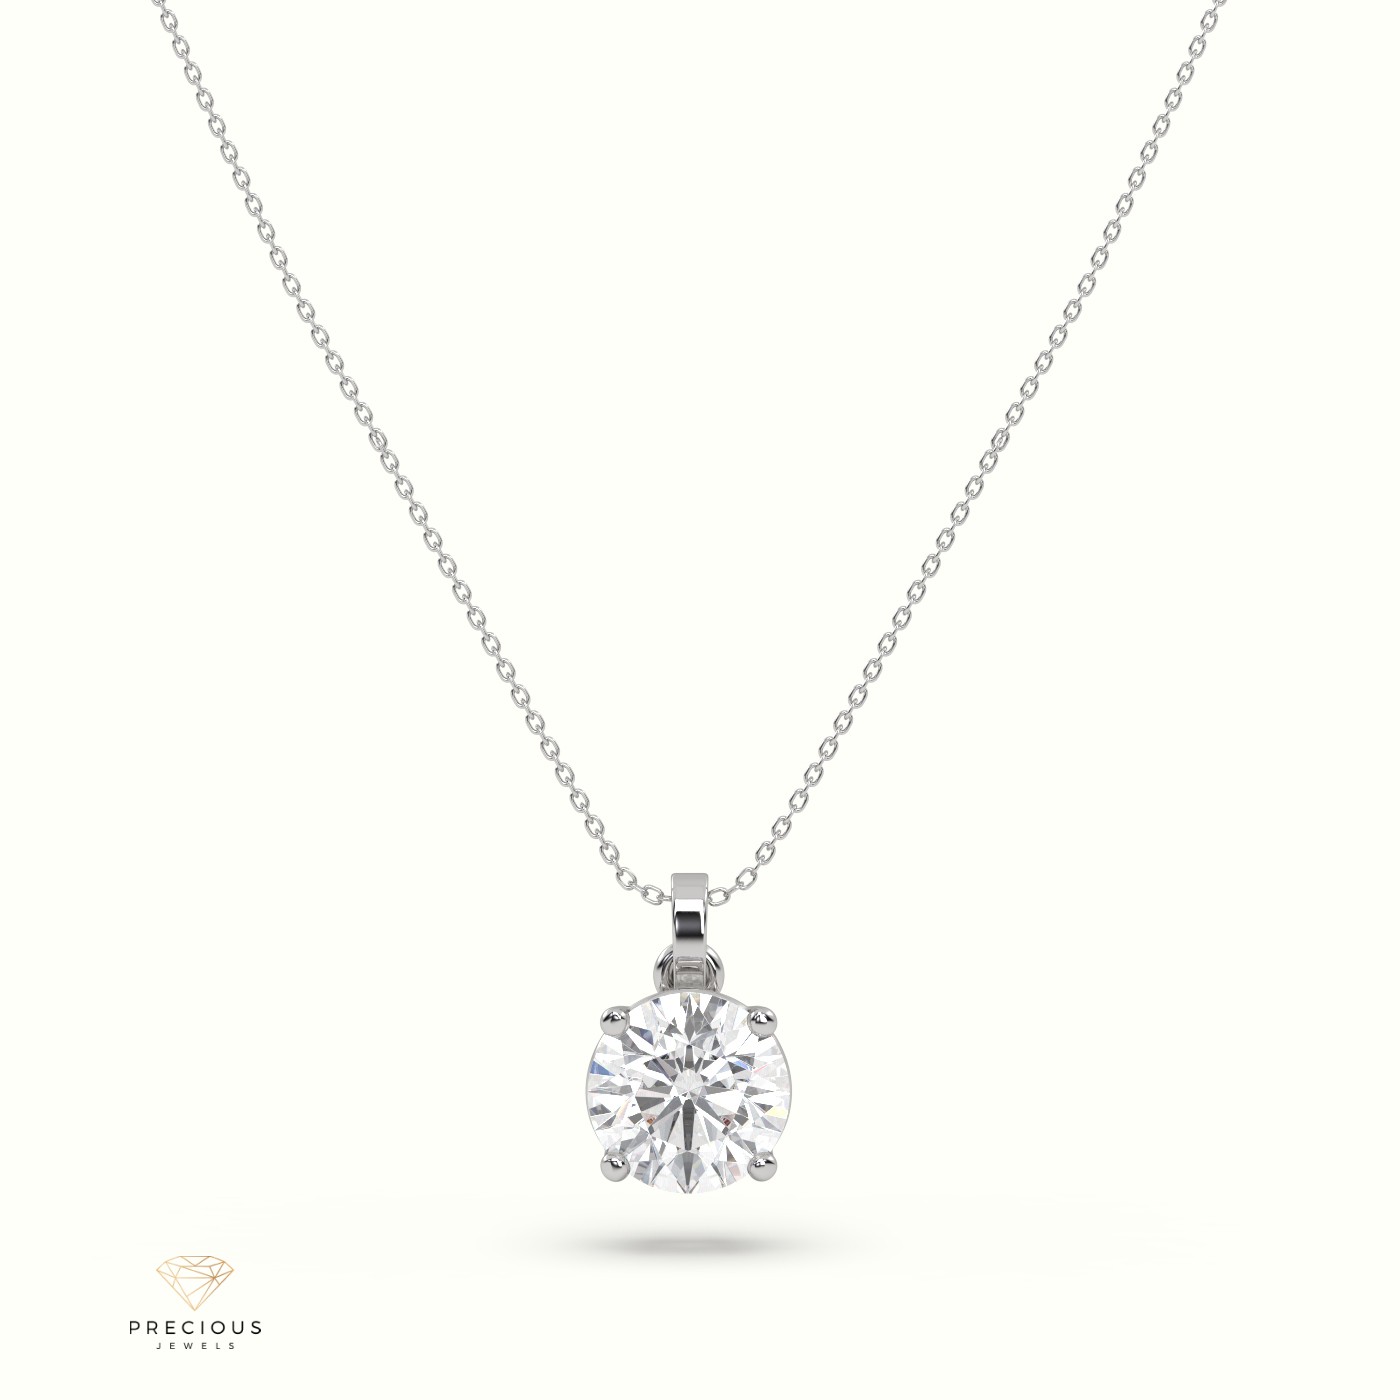 18k white gold diamond solitair pendant 0.90 carat 4 round shaped prongs